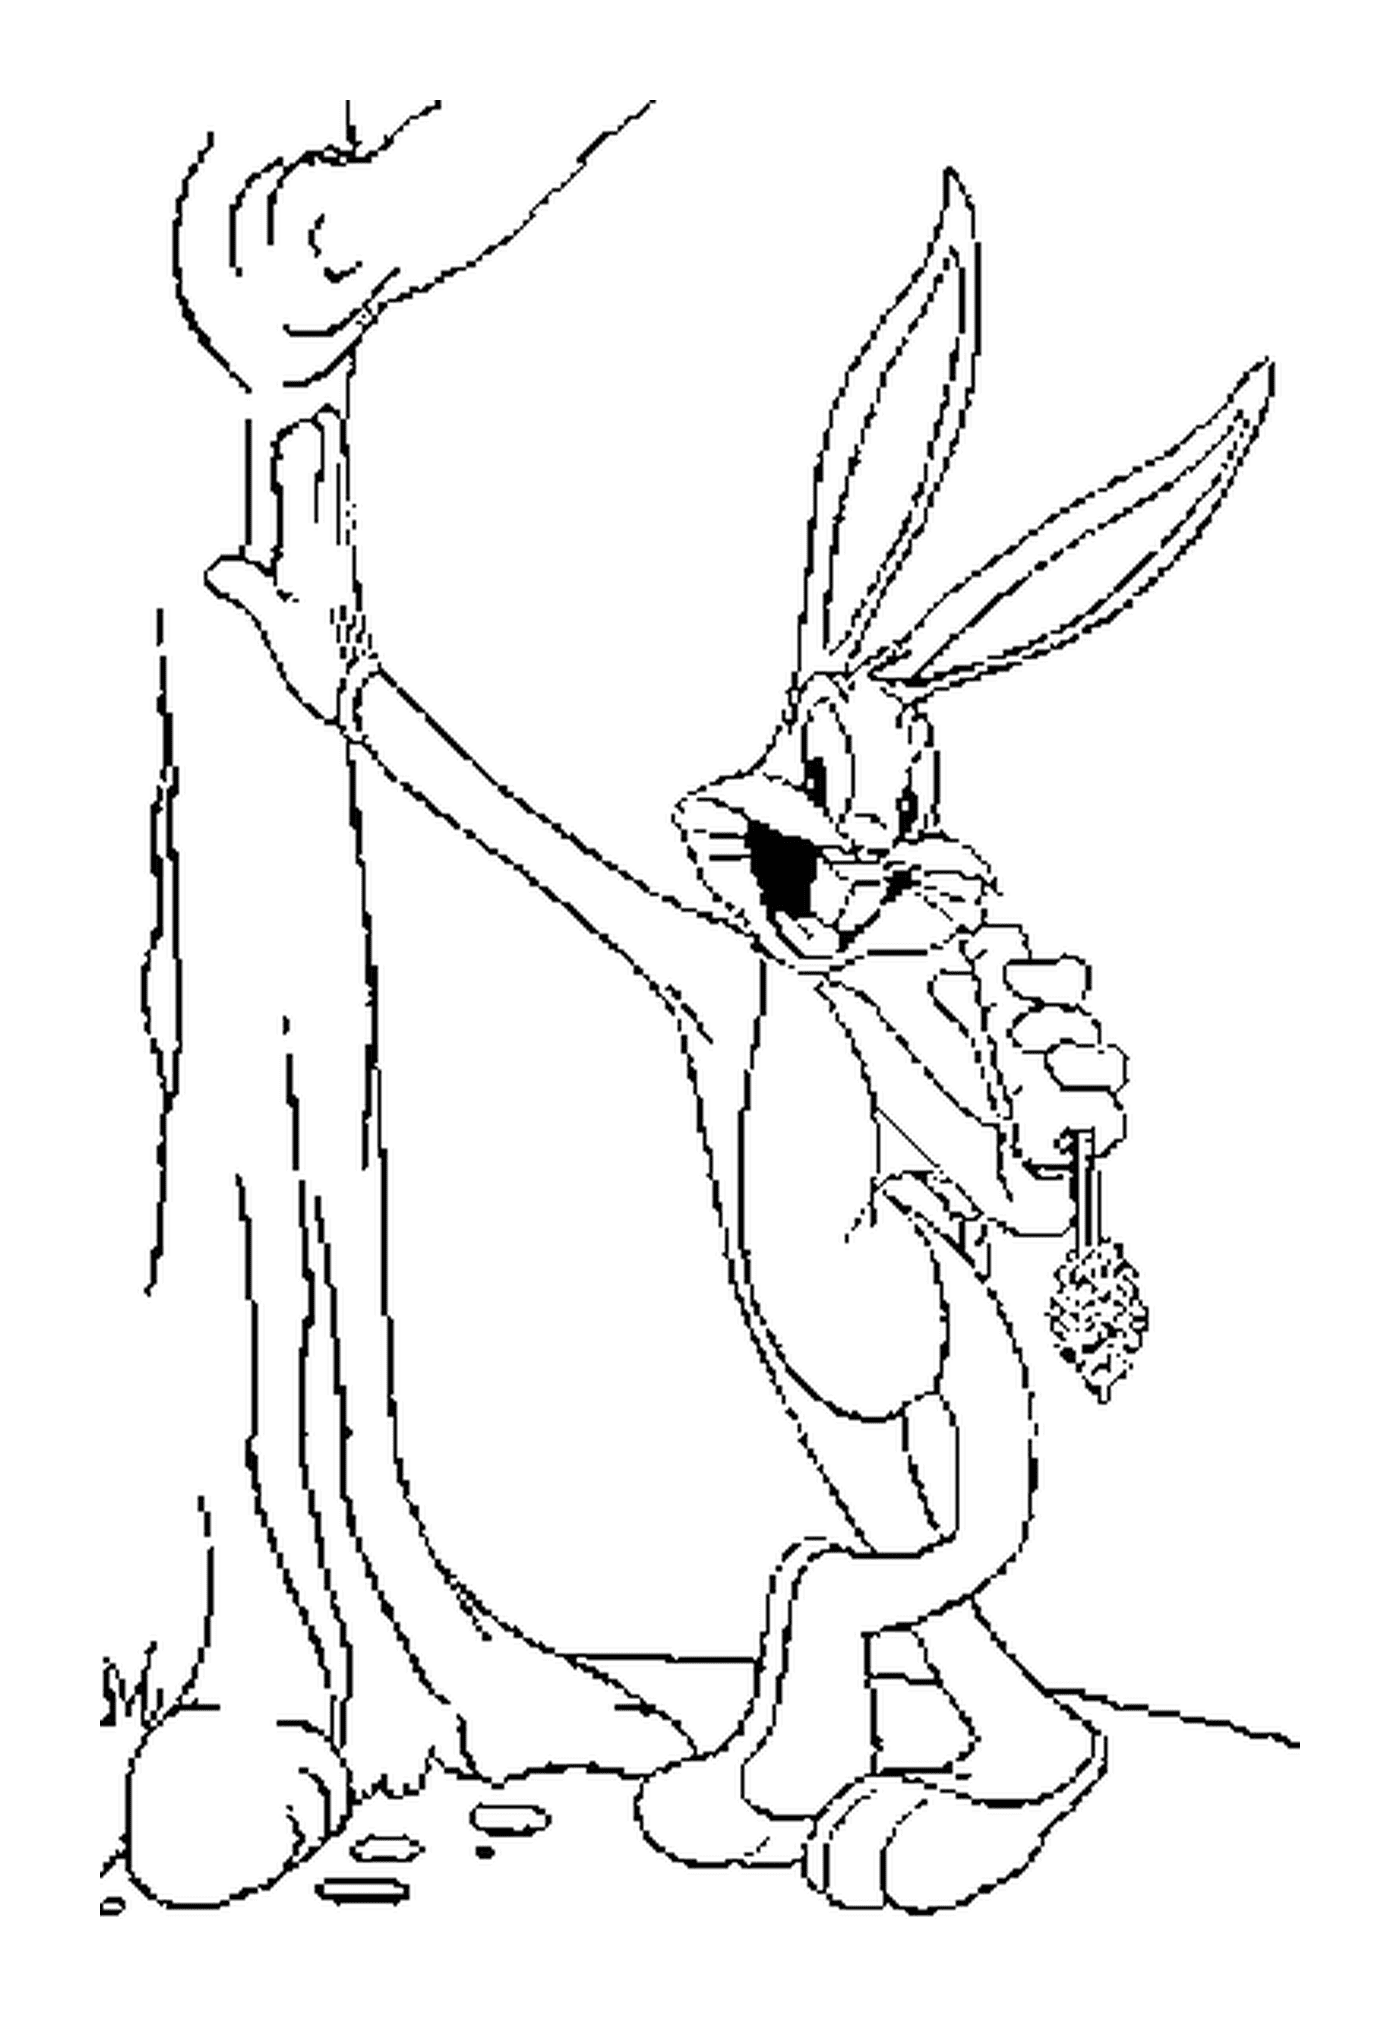  Bugs Bunny eats a carrot by a tree 